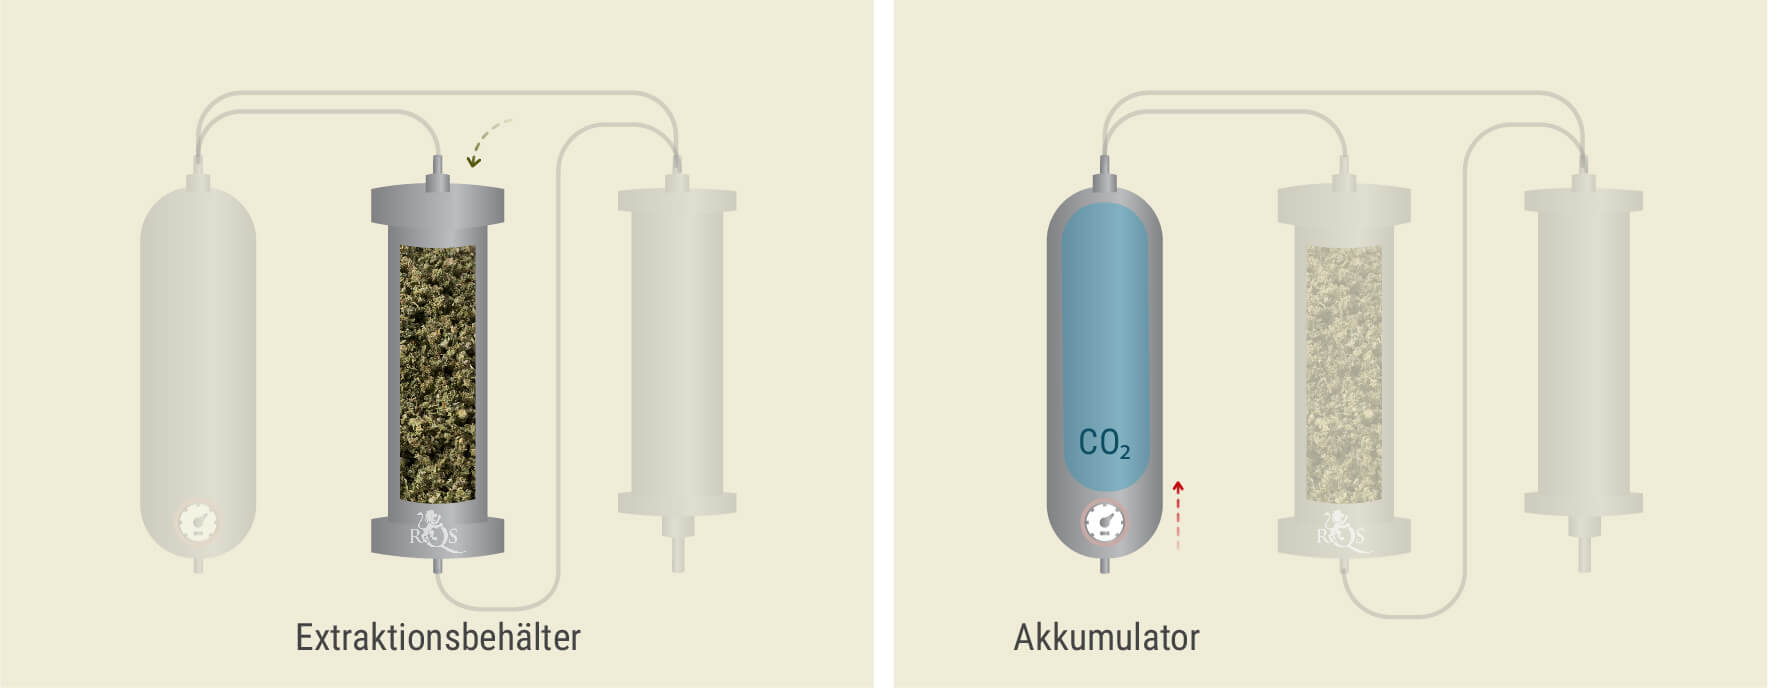 CO₂-Extraktion: Schritt-für-Schritt-Prozess